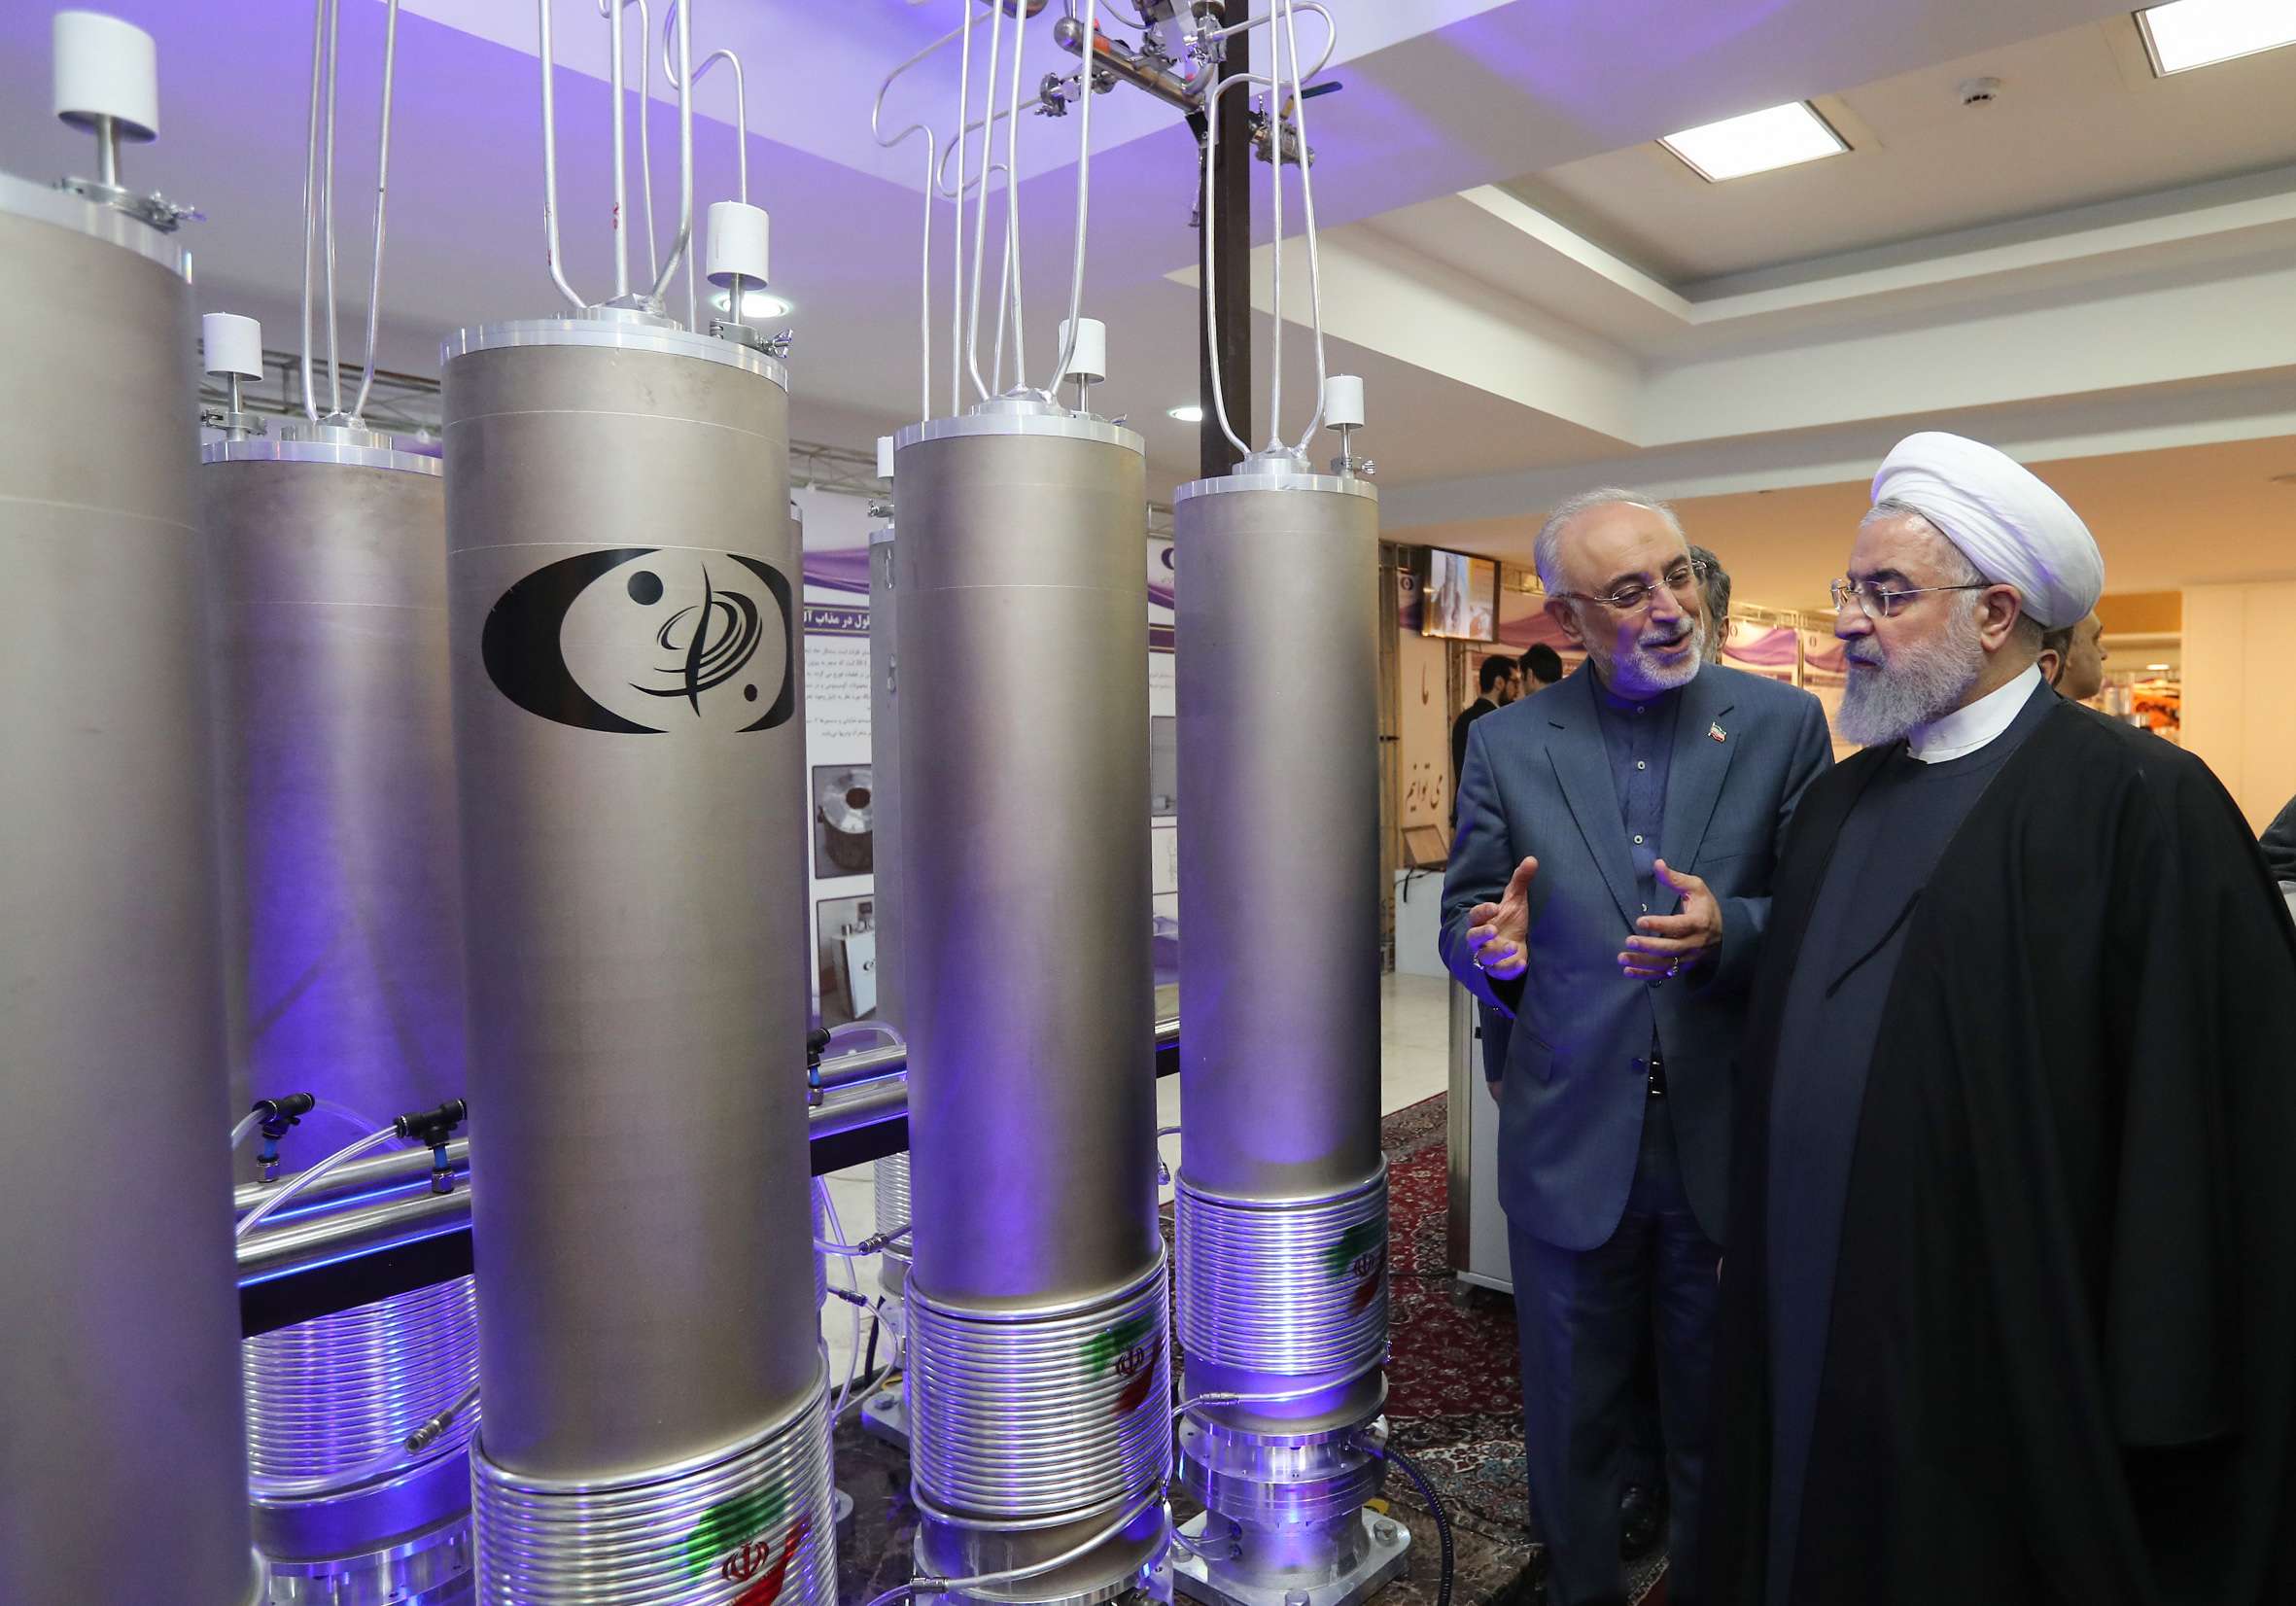 إيران تخصب اليورانيم "بلا قيود" خرقا للاتفاق النووي